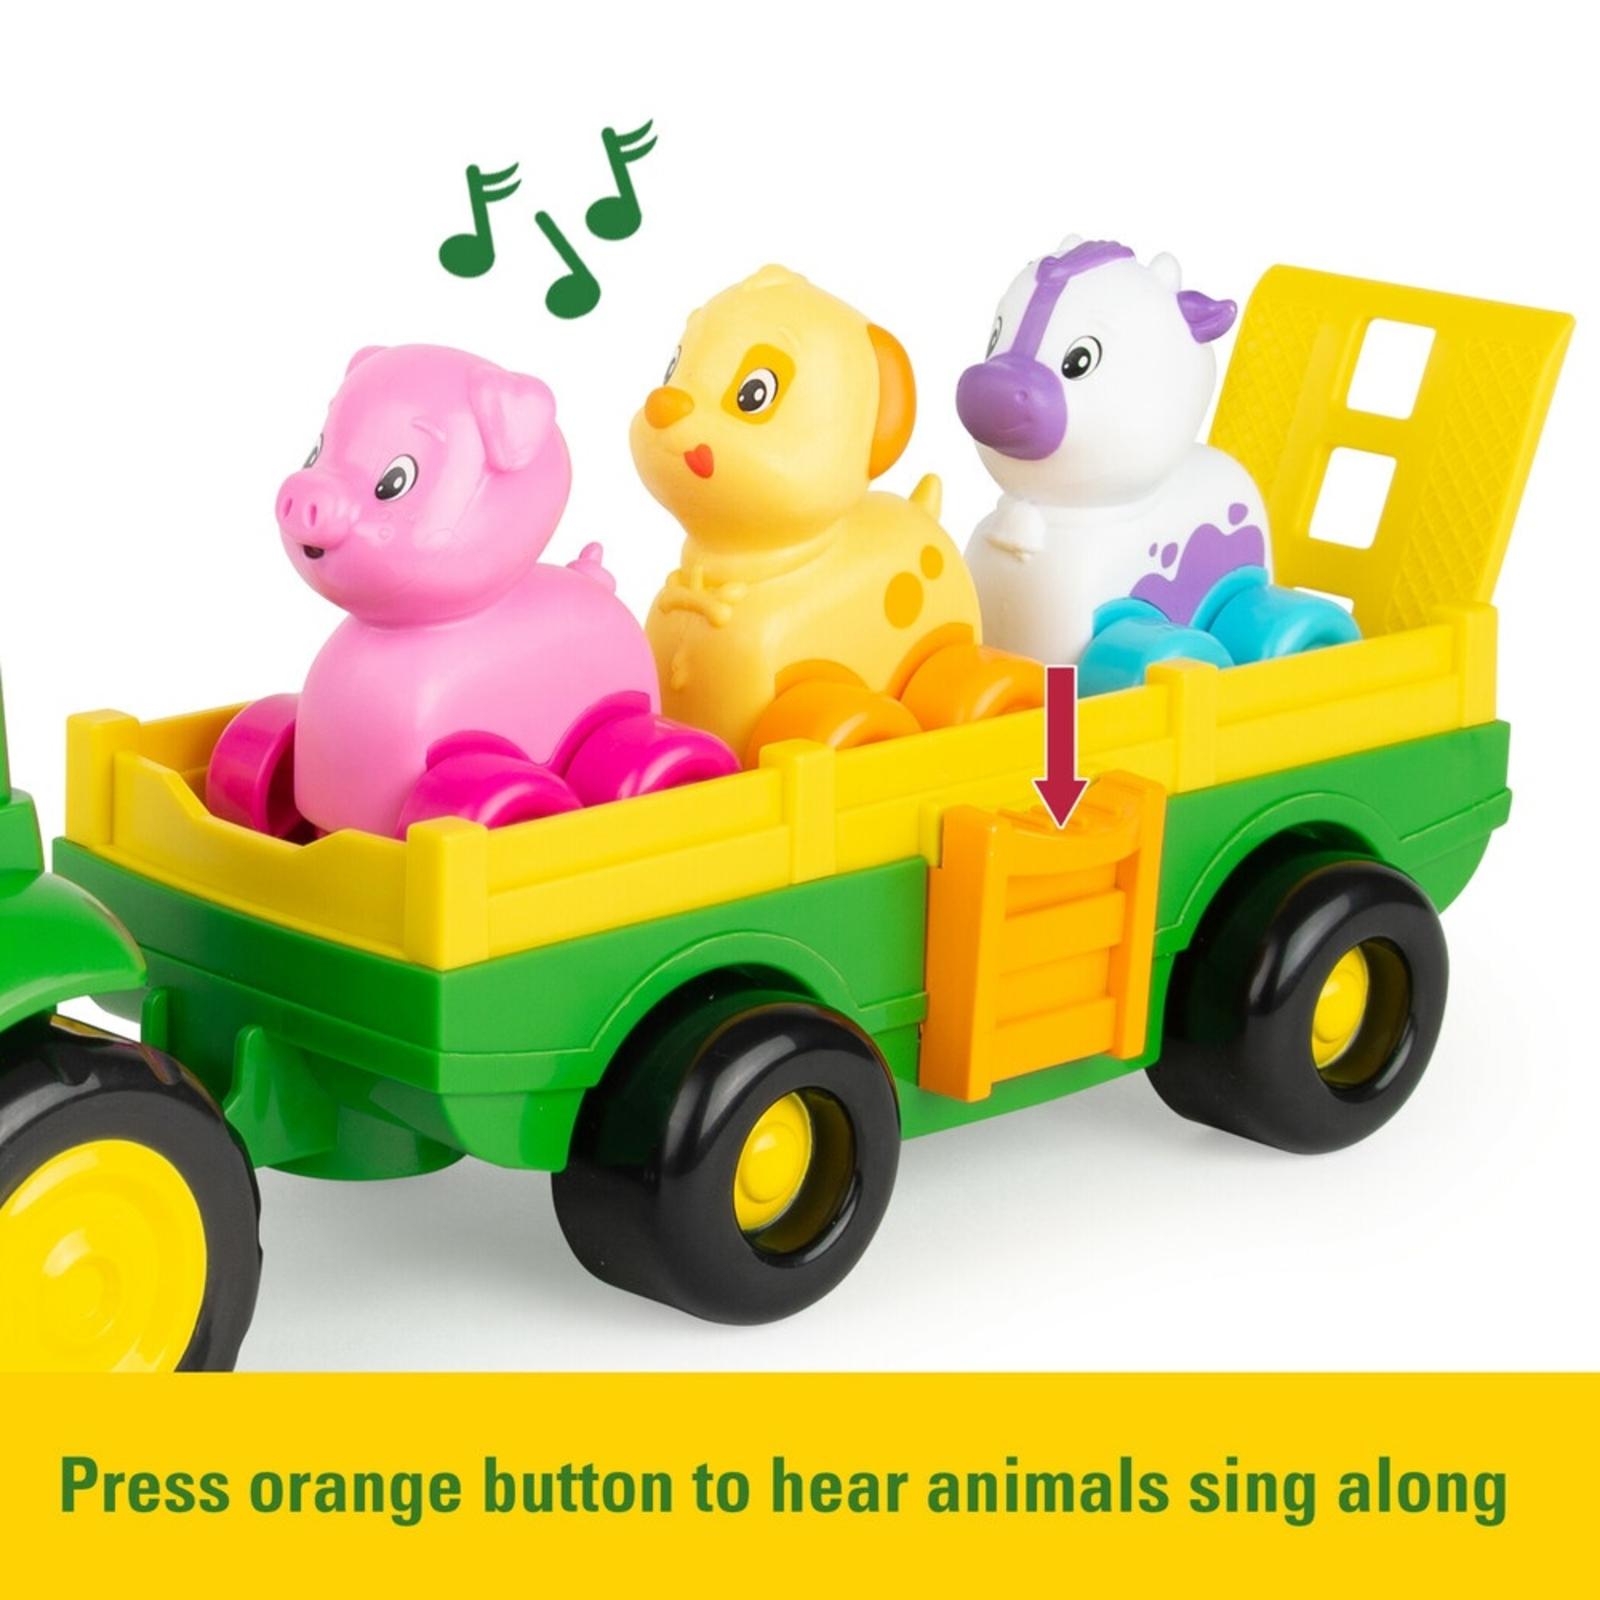 press orange button to hear animals sing along